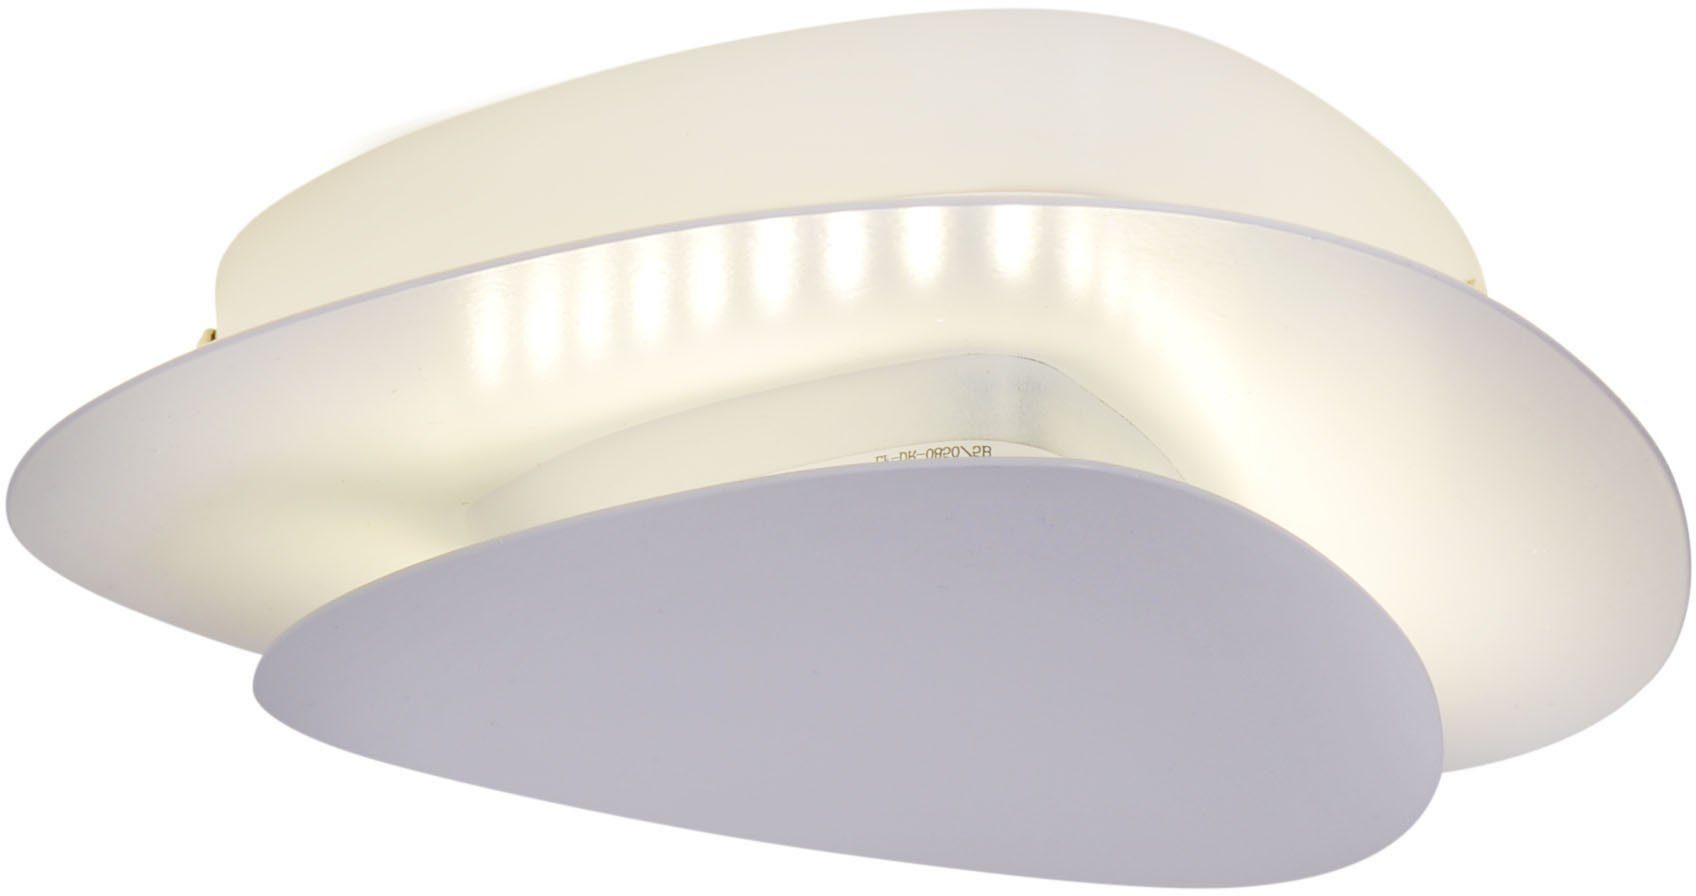 näve LED Deckenleuchte Material: Farbe: integriert, weiß Treiber, fest Energieeffizienzklasse Liso, Warmweiß, Metall, incl. G, LED